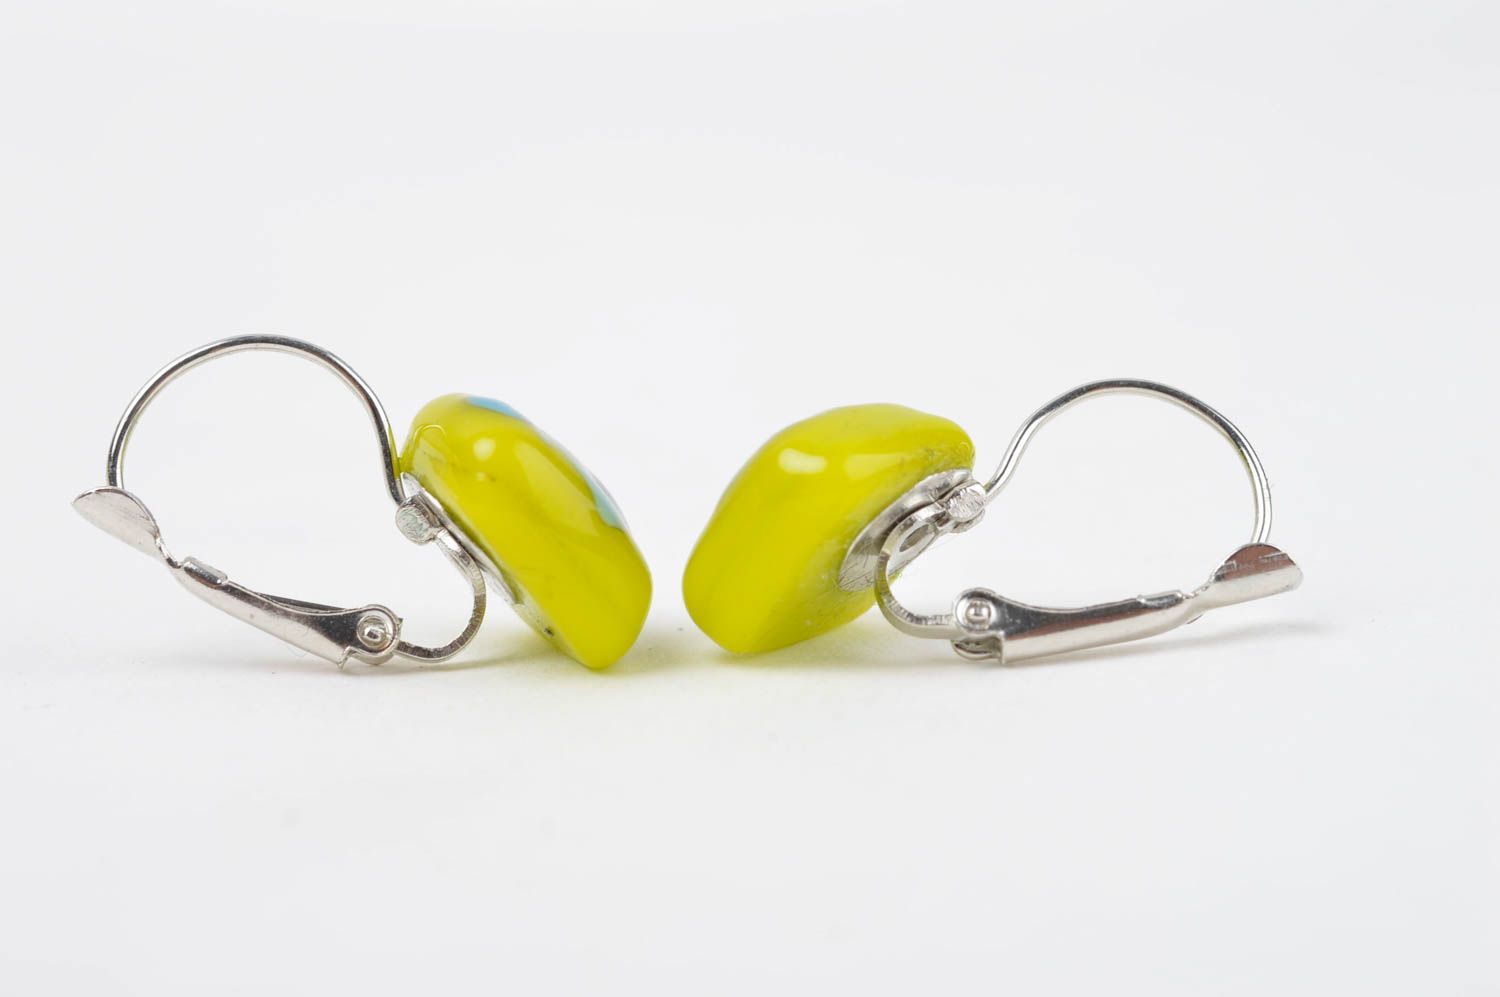 Unusual handmade glass earrings fashion accessories artisan jewelry gift ideas photo 2